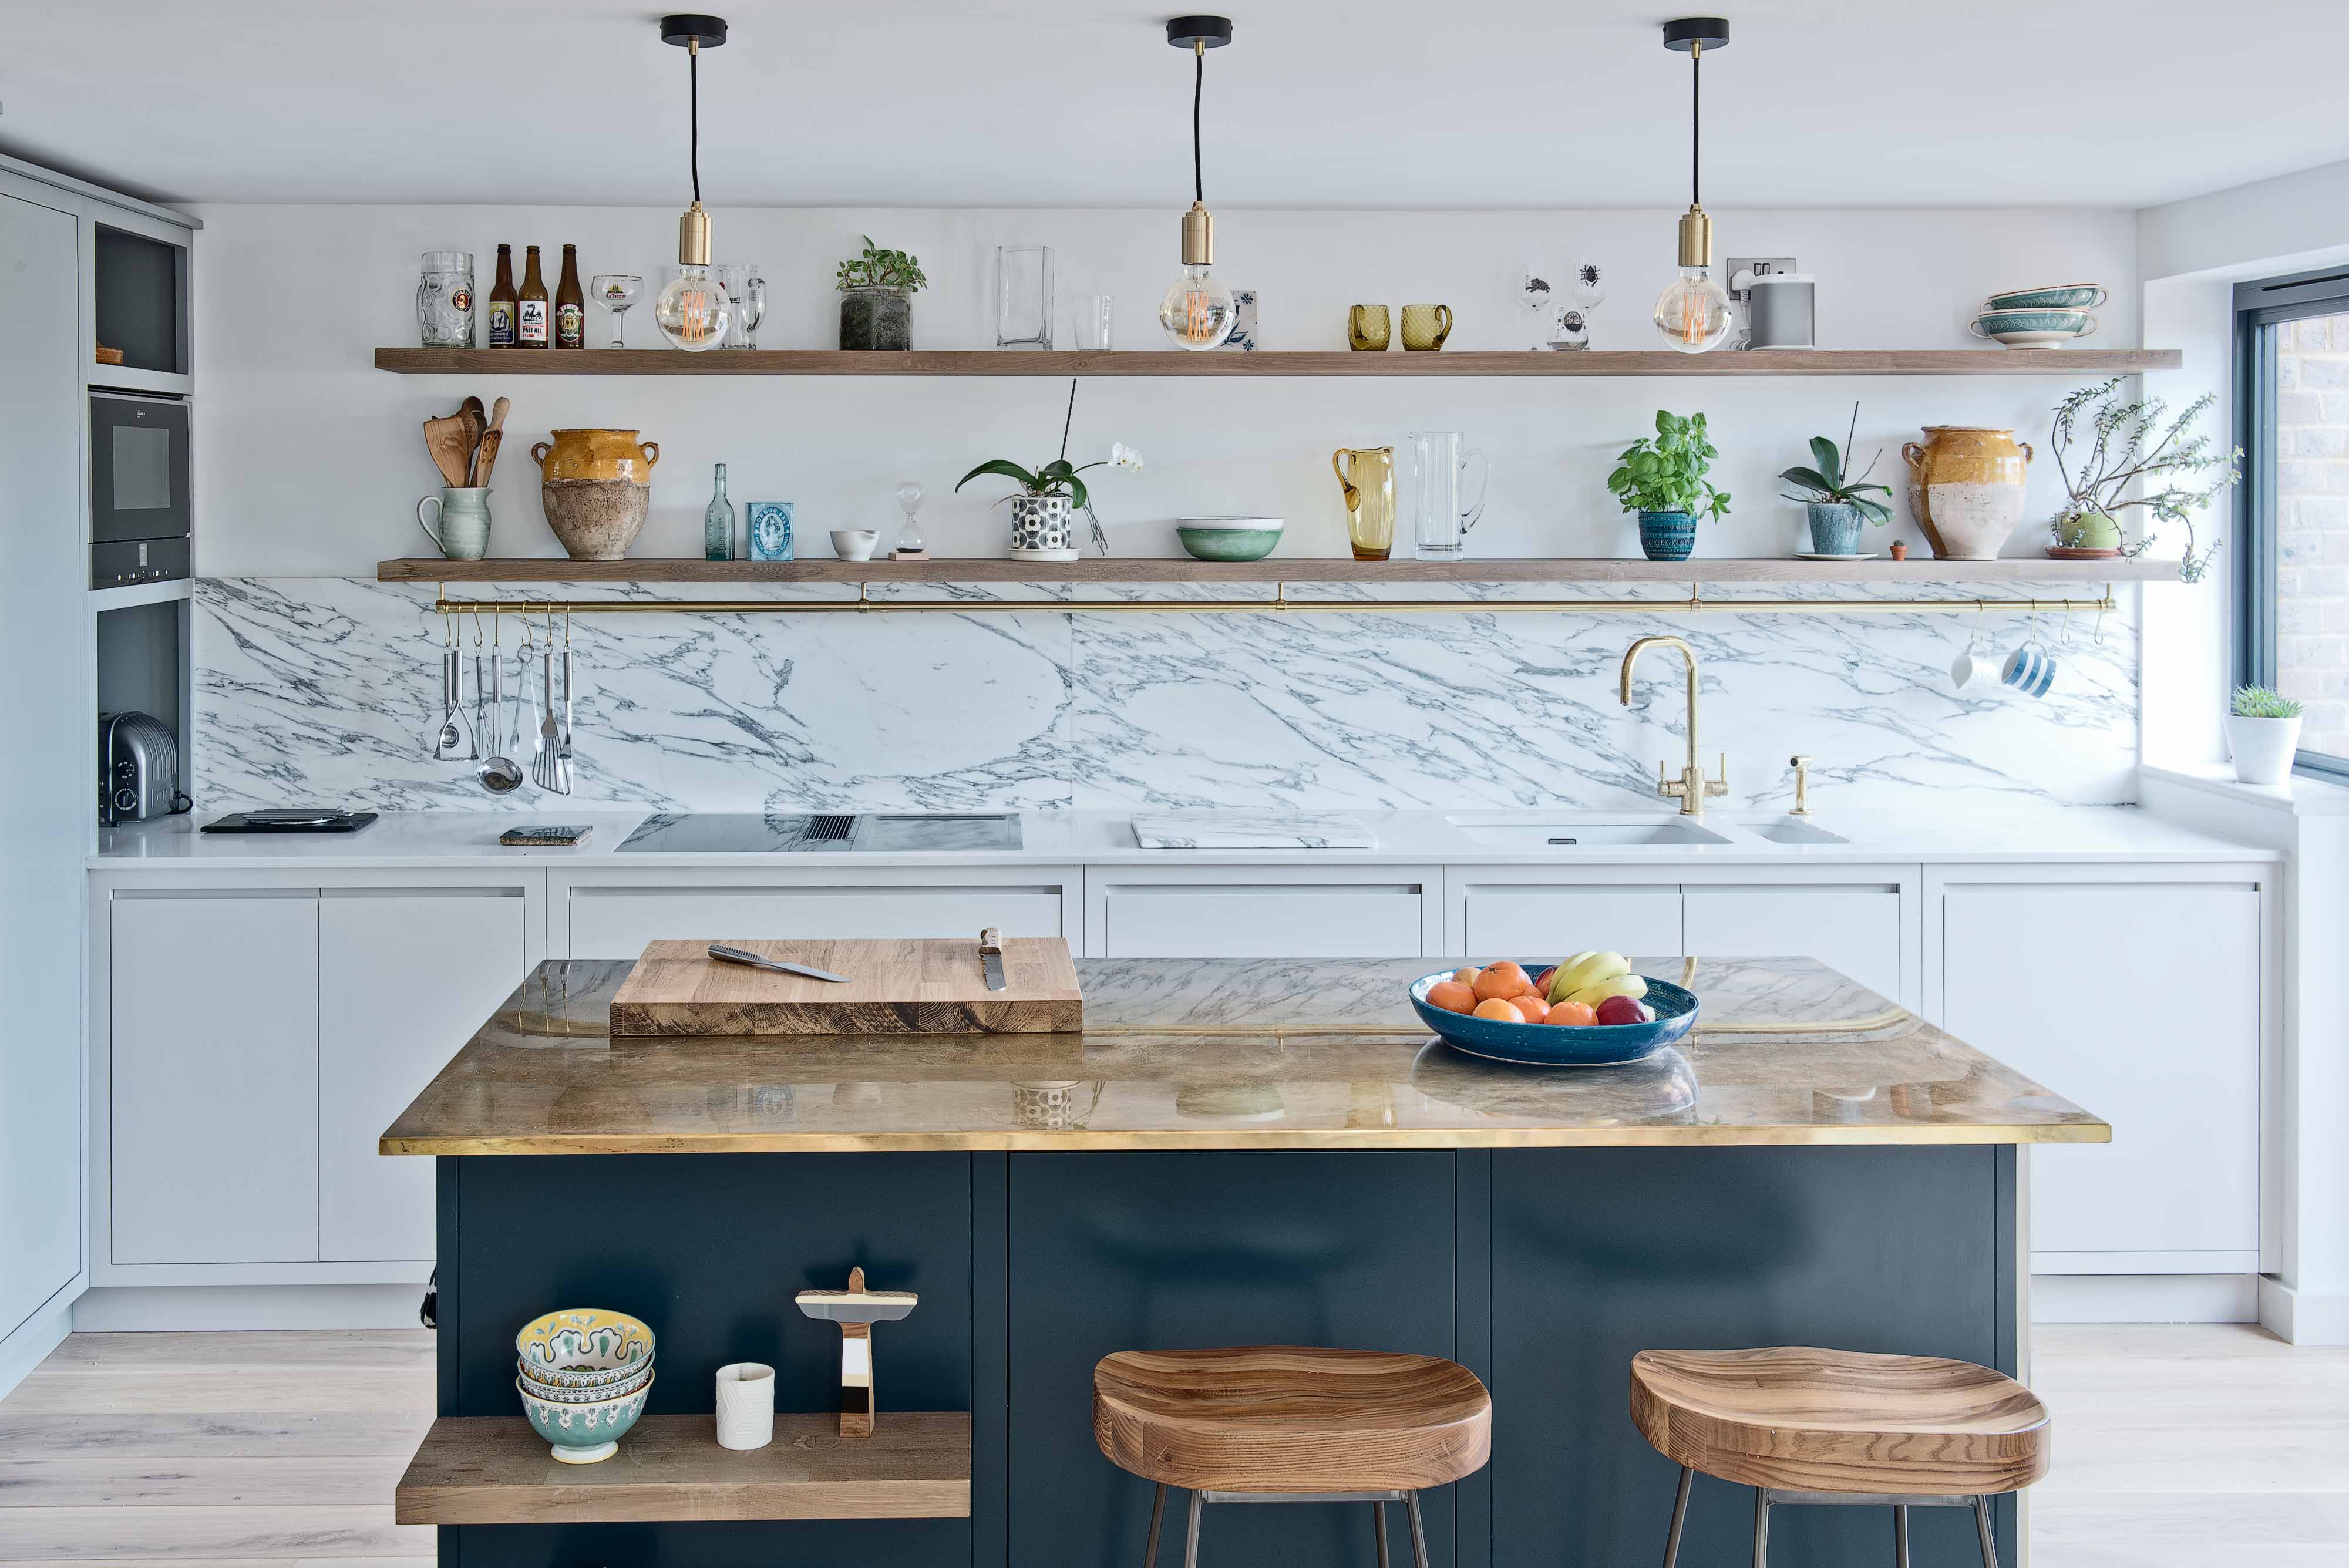 Contemporary shaker style bespoke kitchen perrin and rowe tap sink marble quartz bora hob fisher paykel fridge farrow and ball Farnham surrey